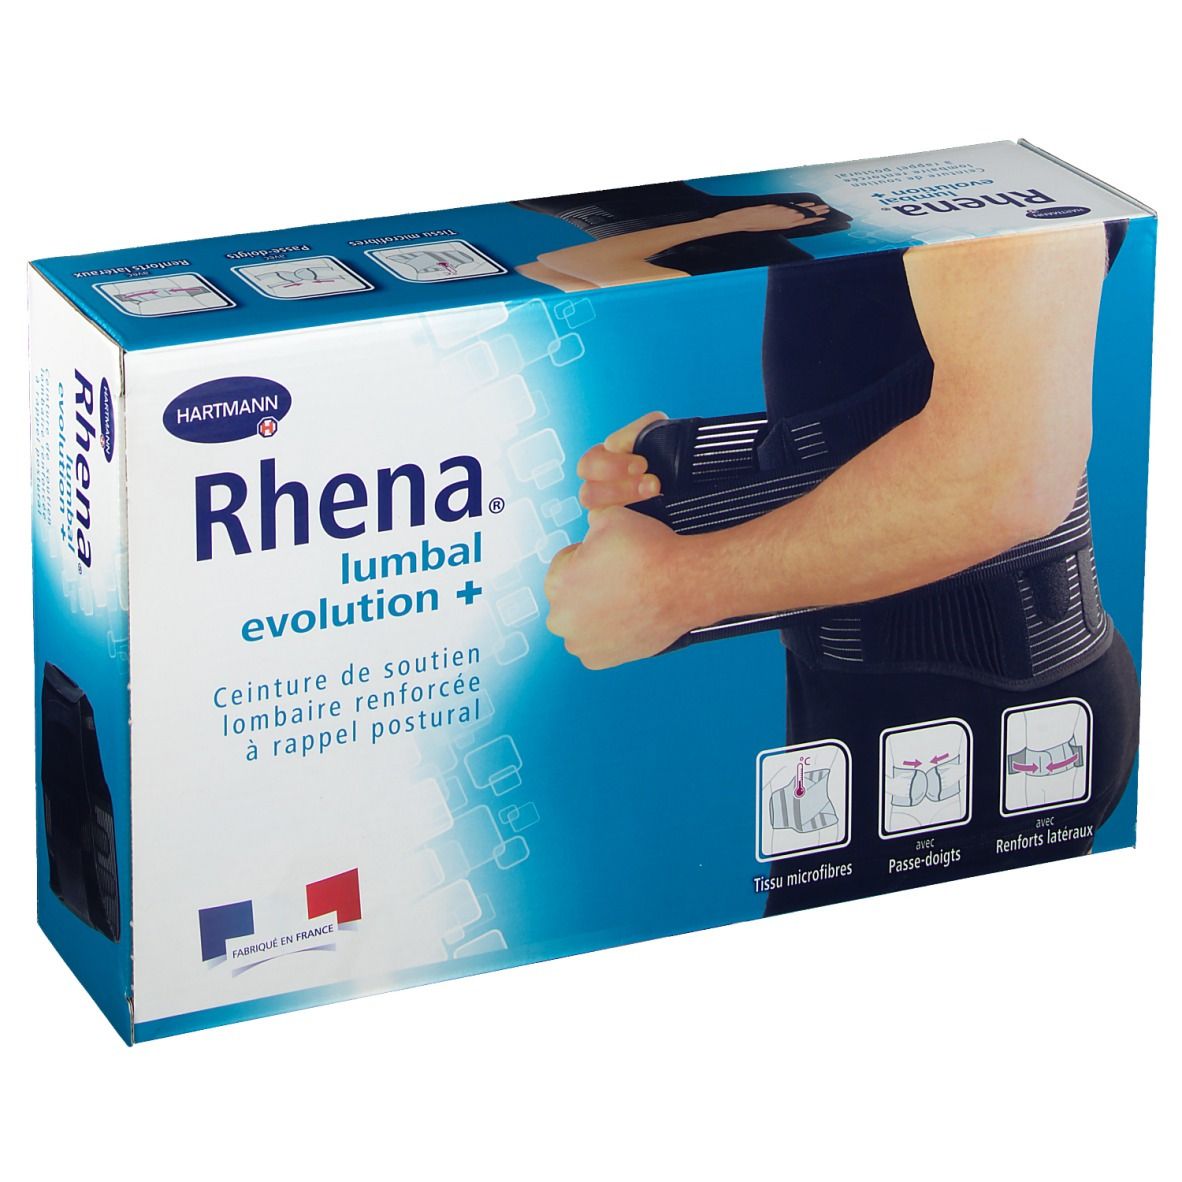 Rhena® lumbal evolution+ Taille 2 H21